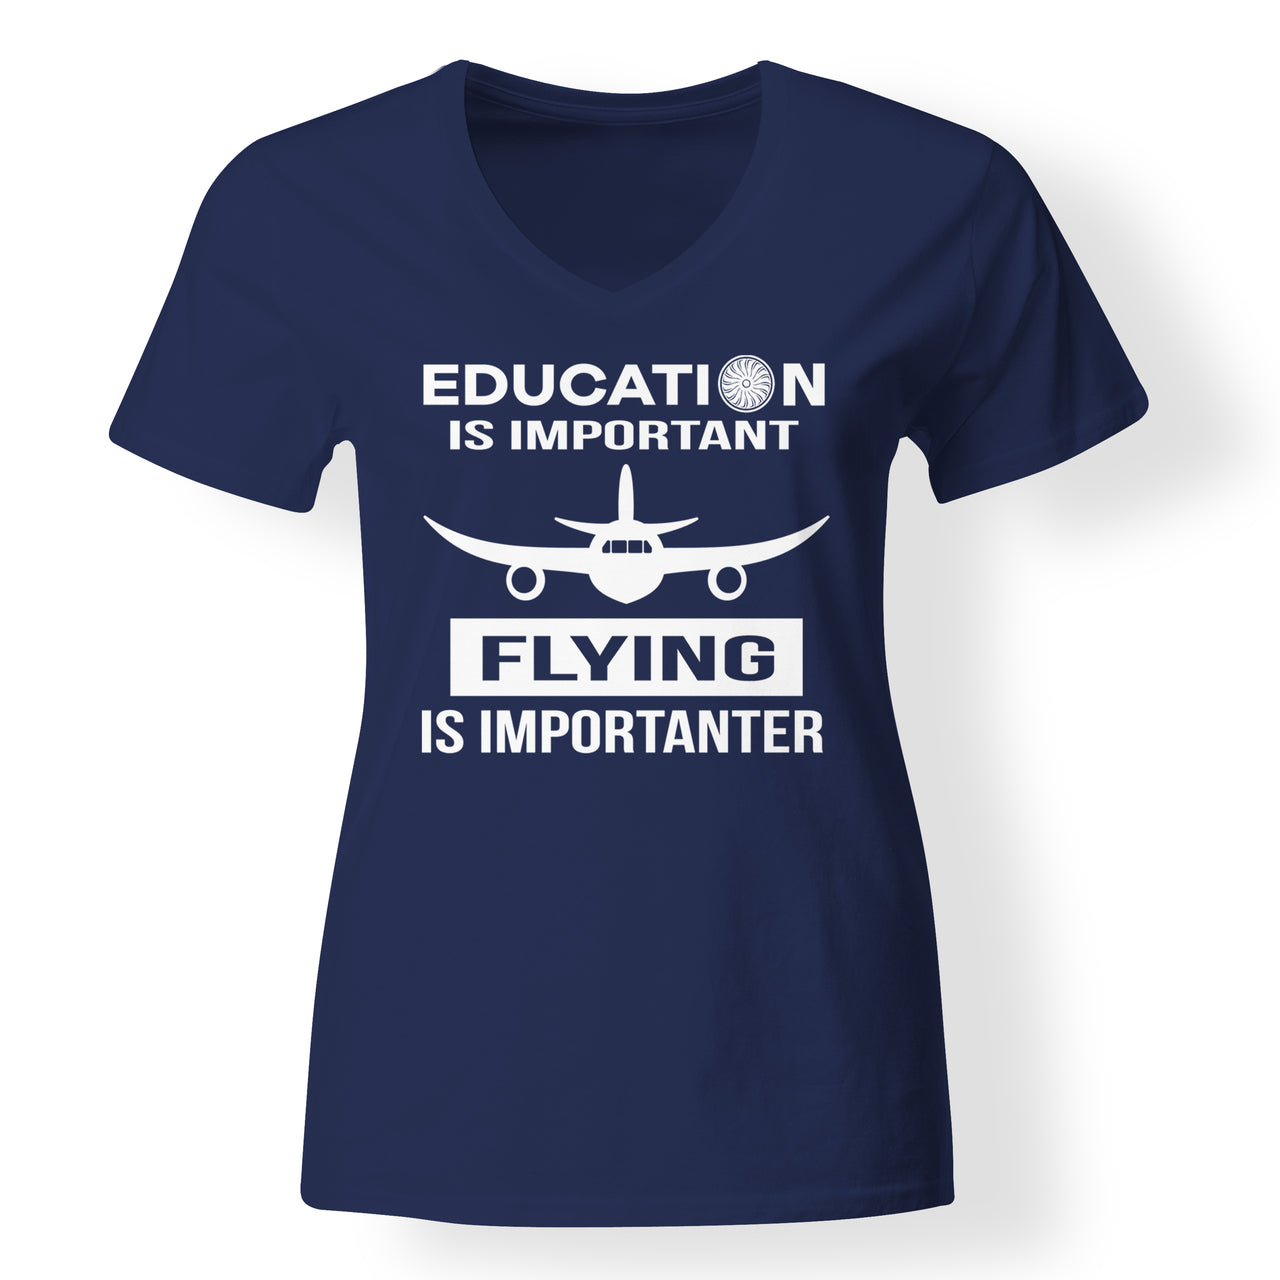 Flying All Around The World Designed V-Neck T-Shirts